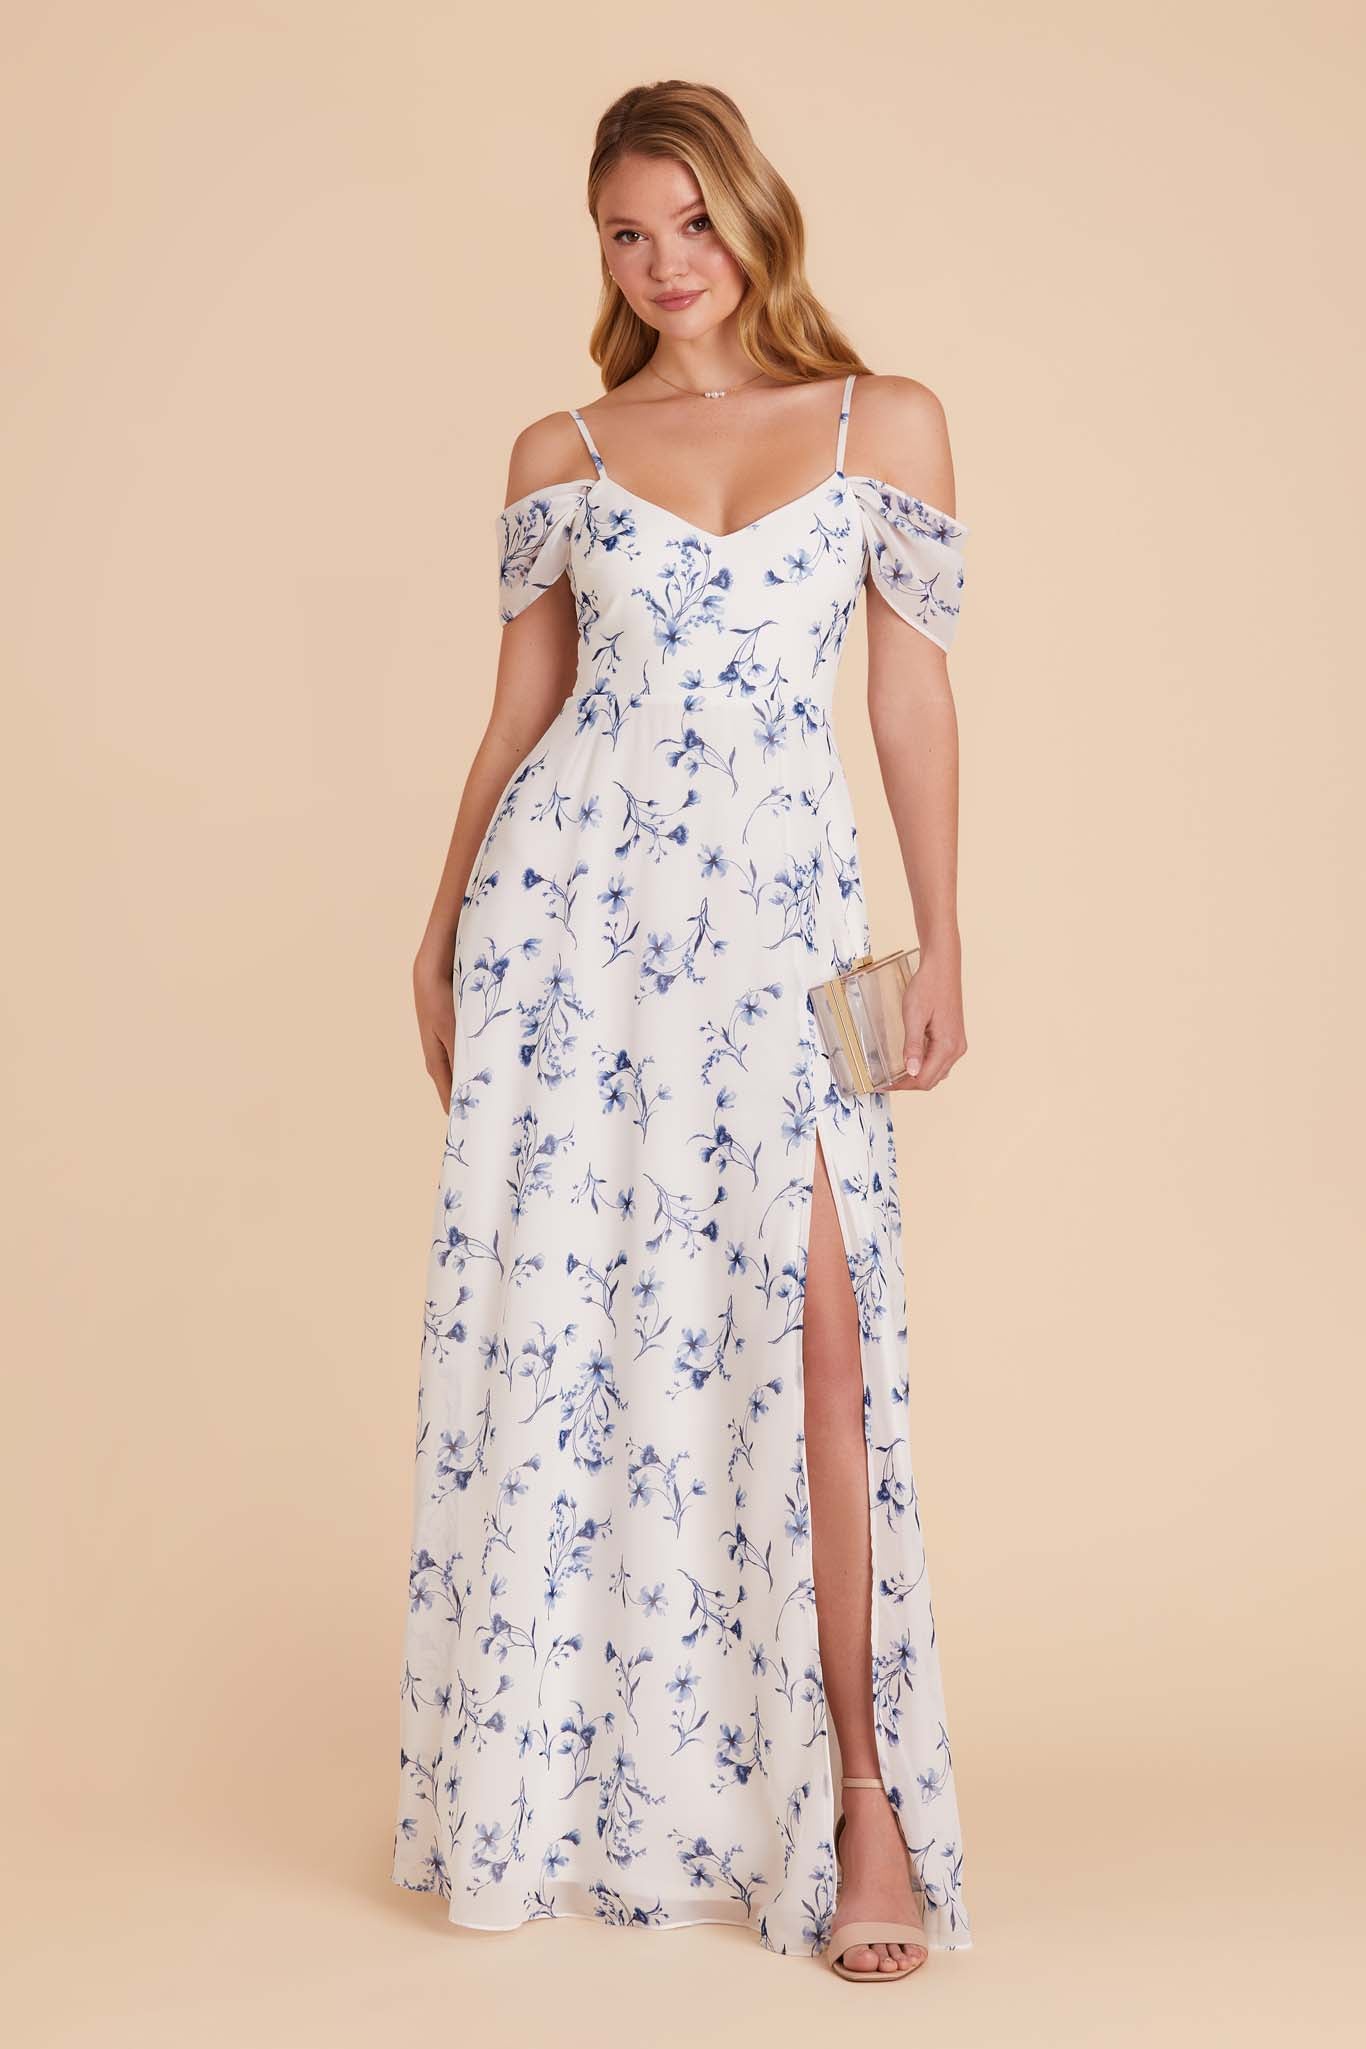 Blue Le Fleur Devin Convertible Dress by Birdy Grey